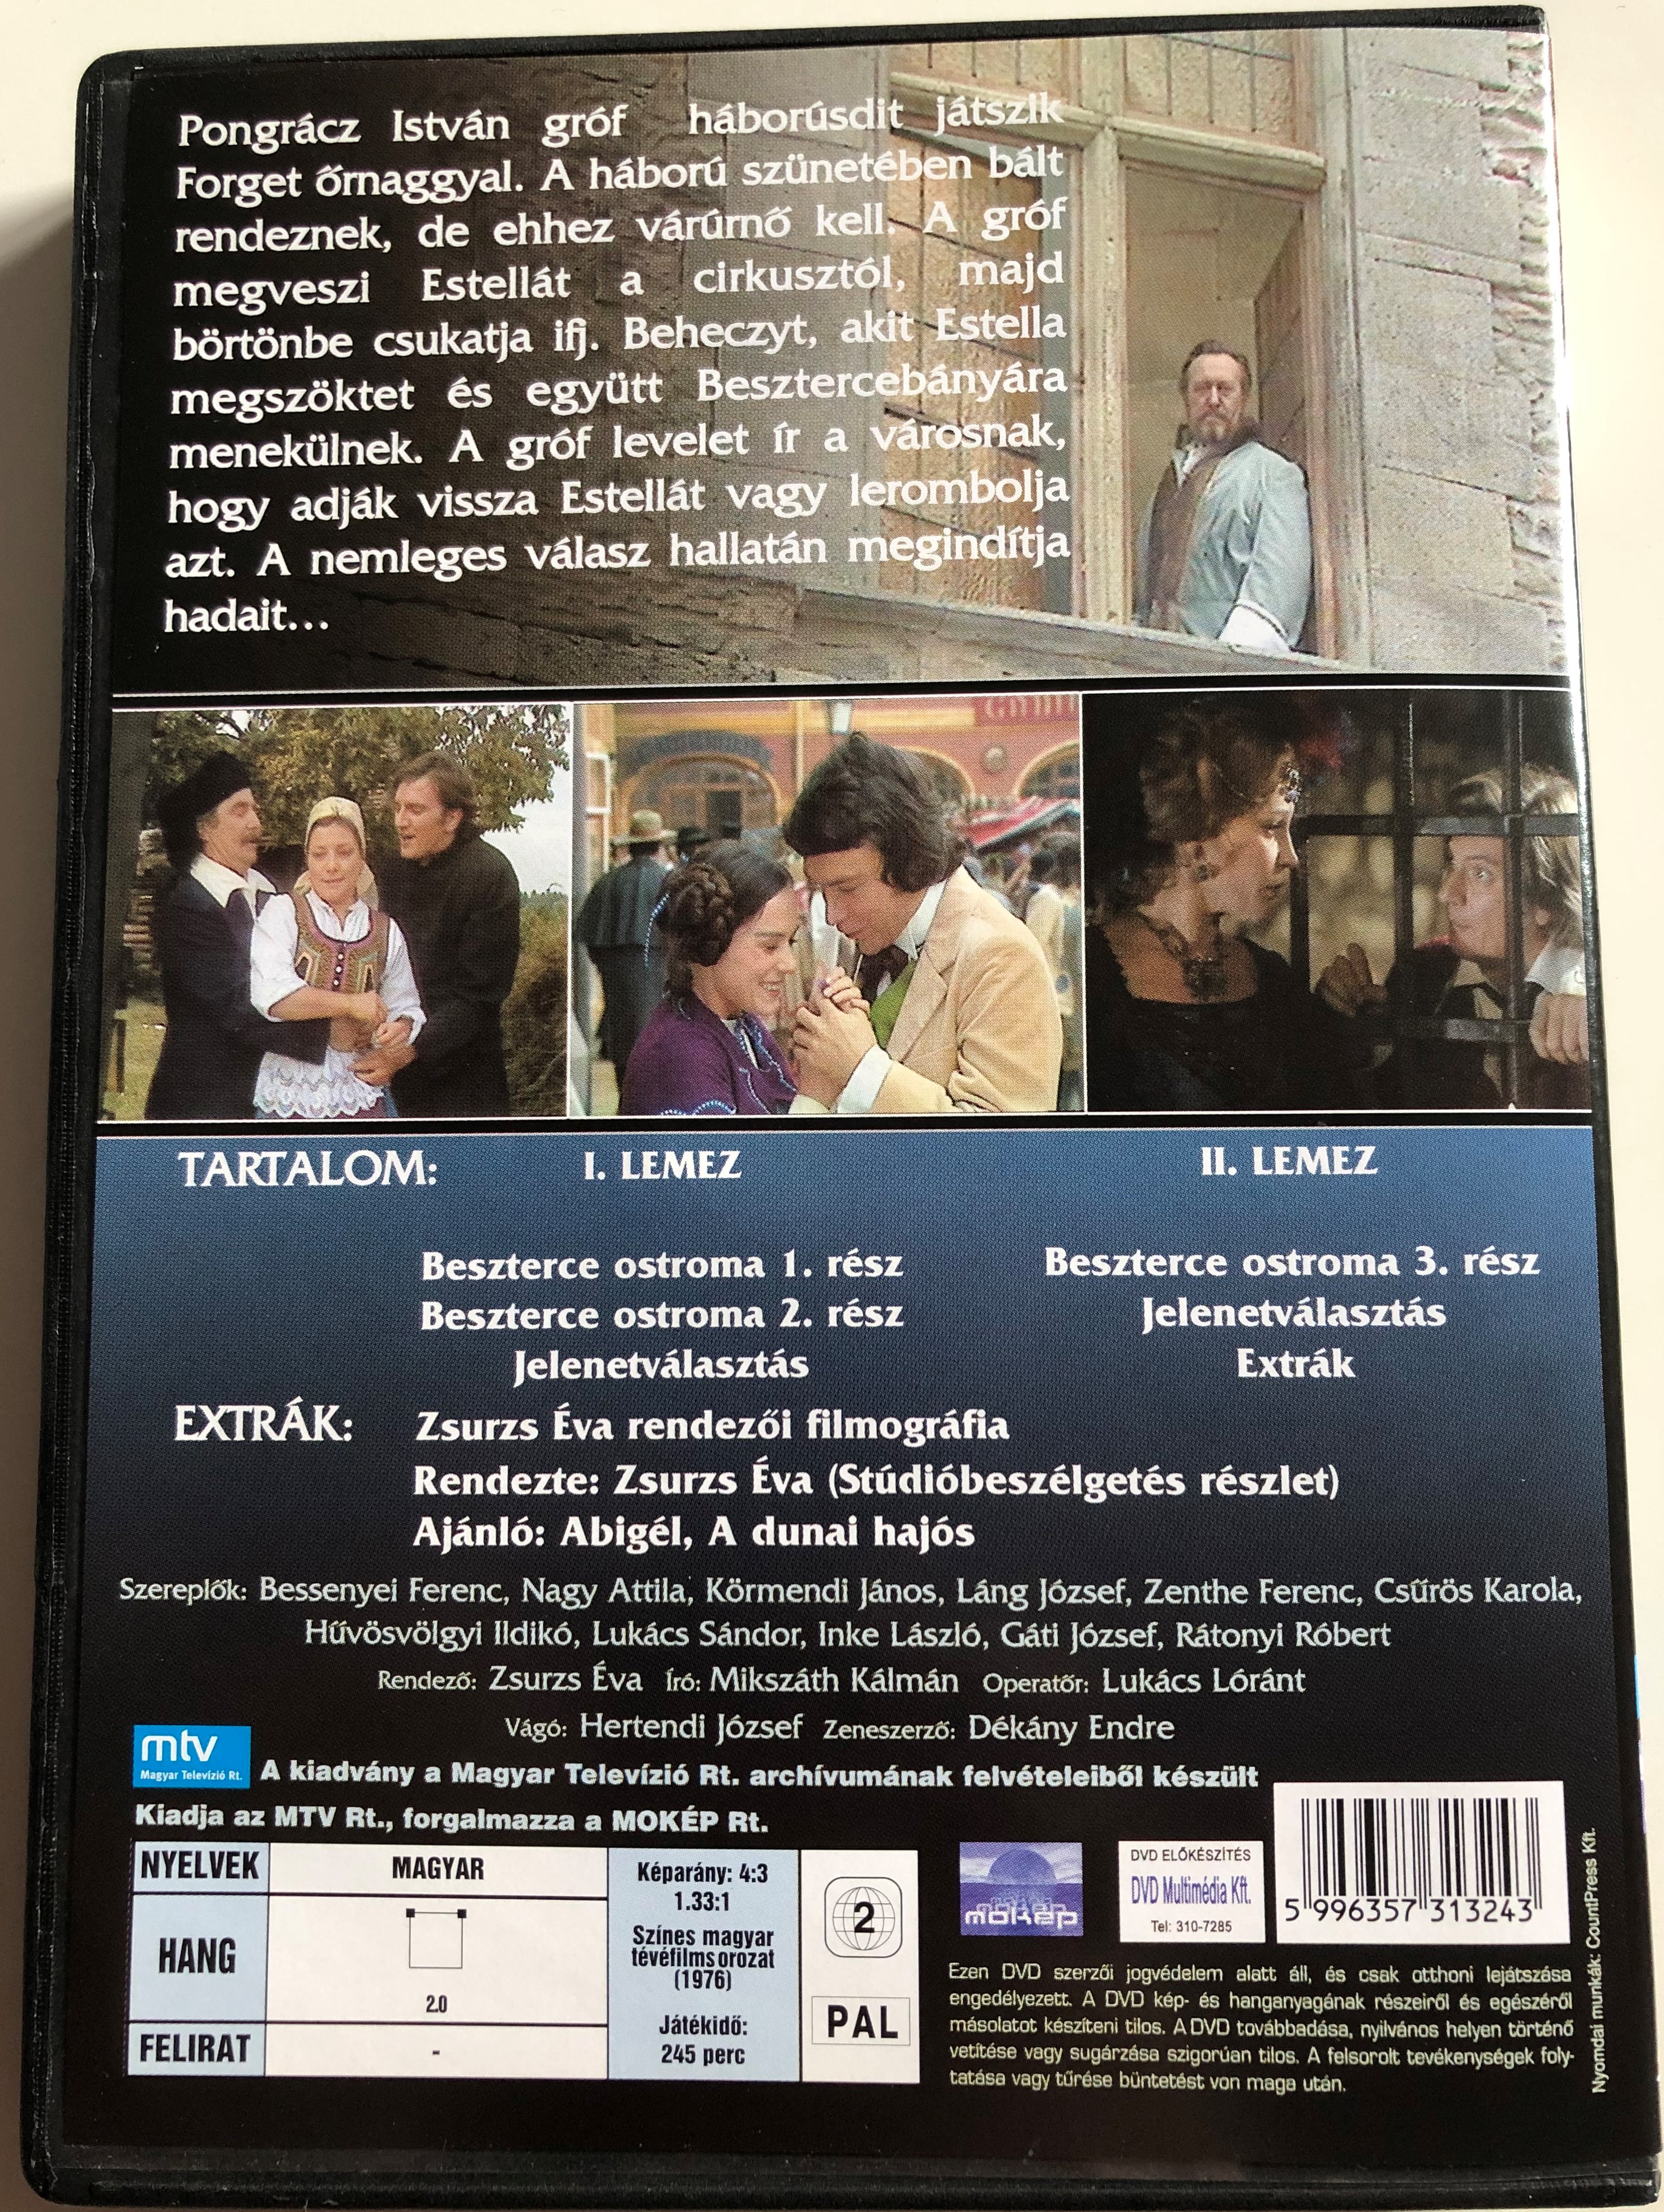 Beszterce ostroma DVD Siege of Bistrița 1.JPG